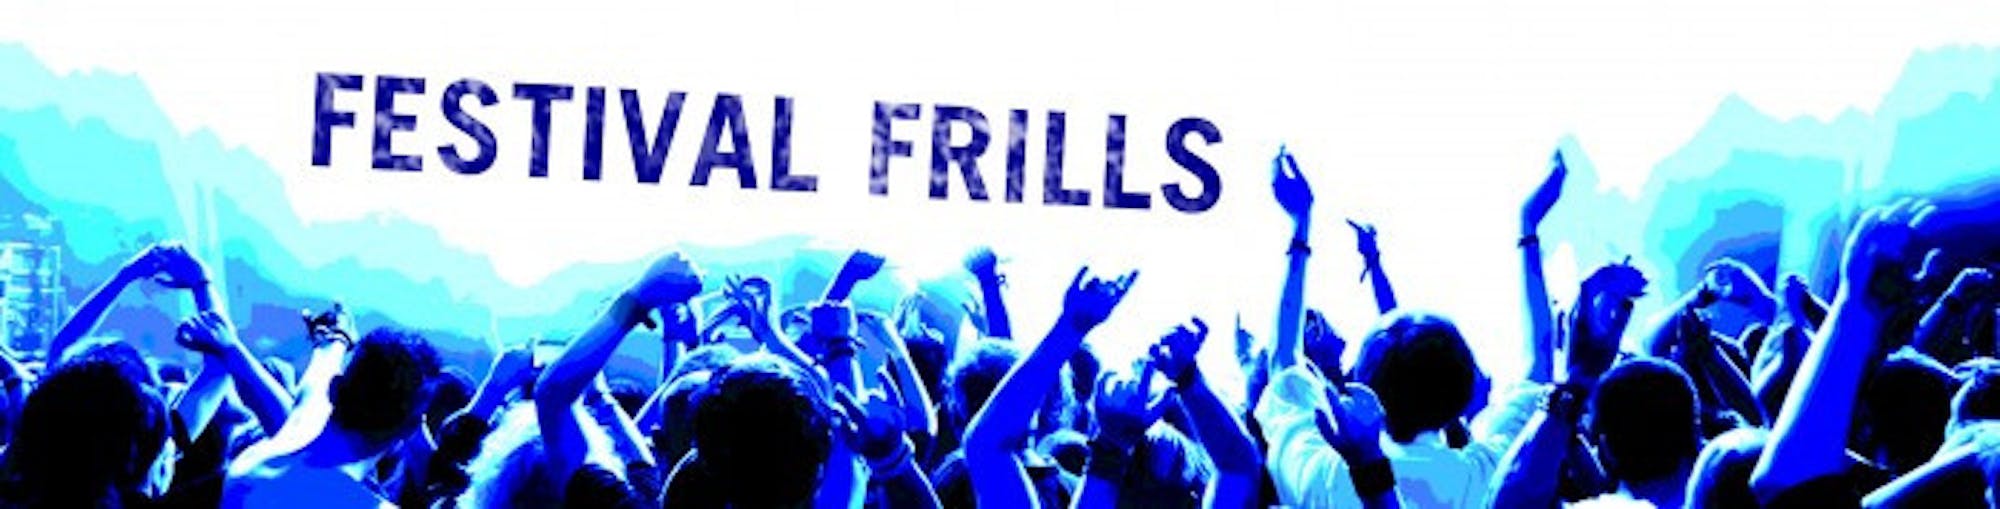 FestivalFrills_BannersWEB